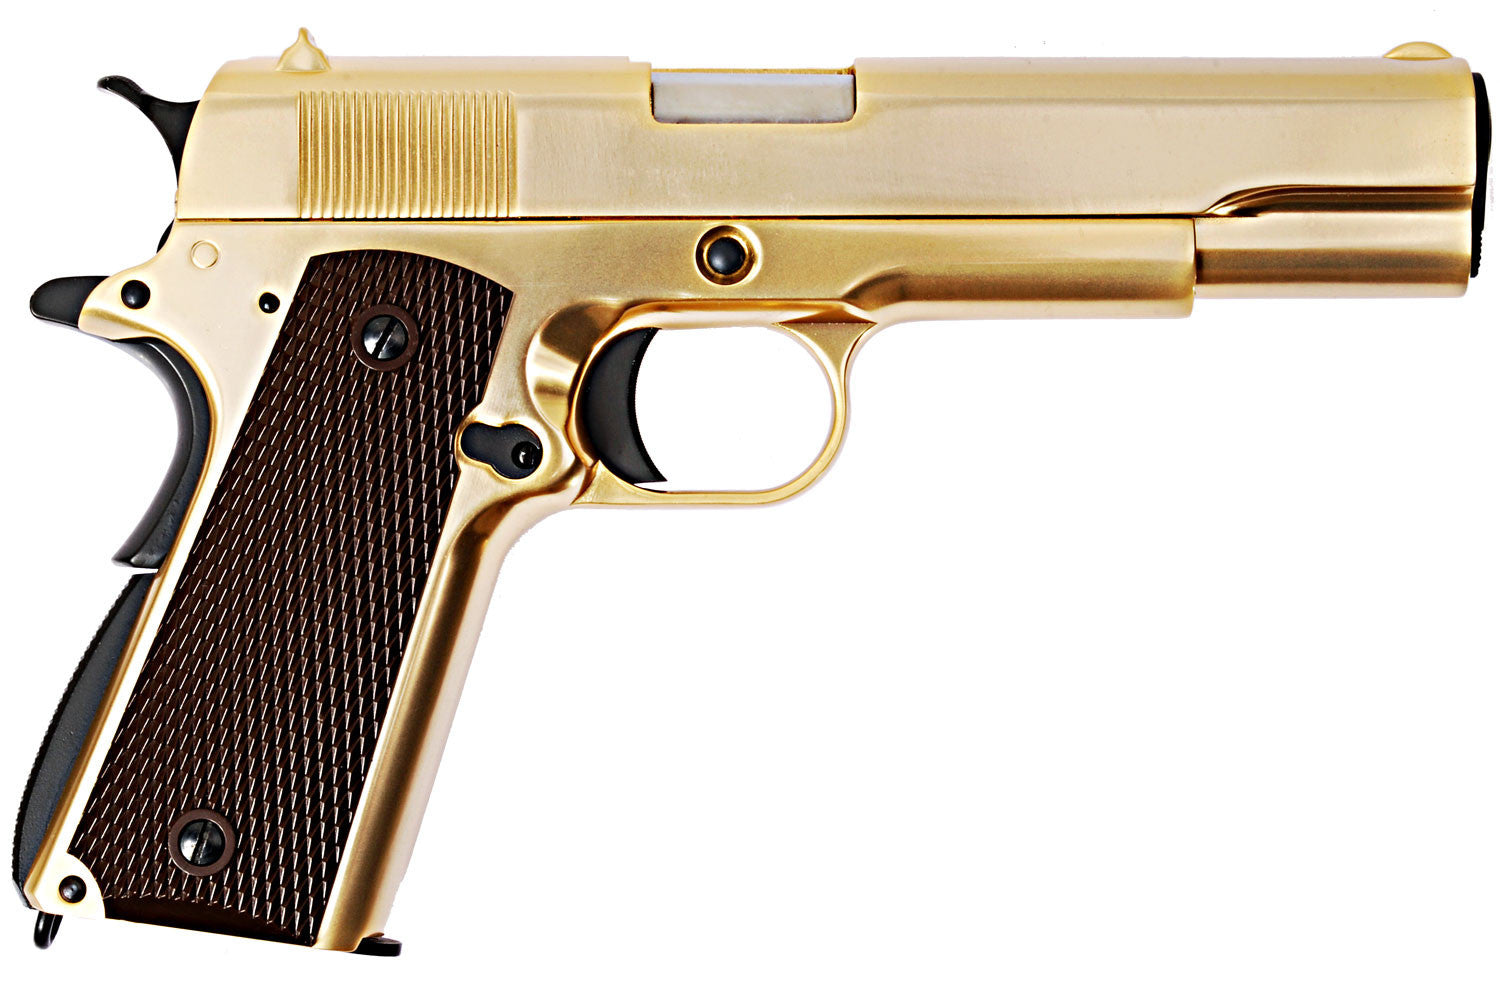 WE Tech 1911 Government Full Metal GBB Pistol (Gold)